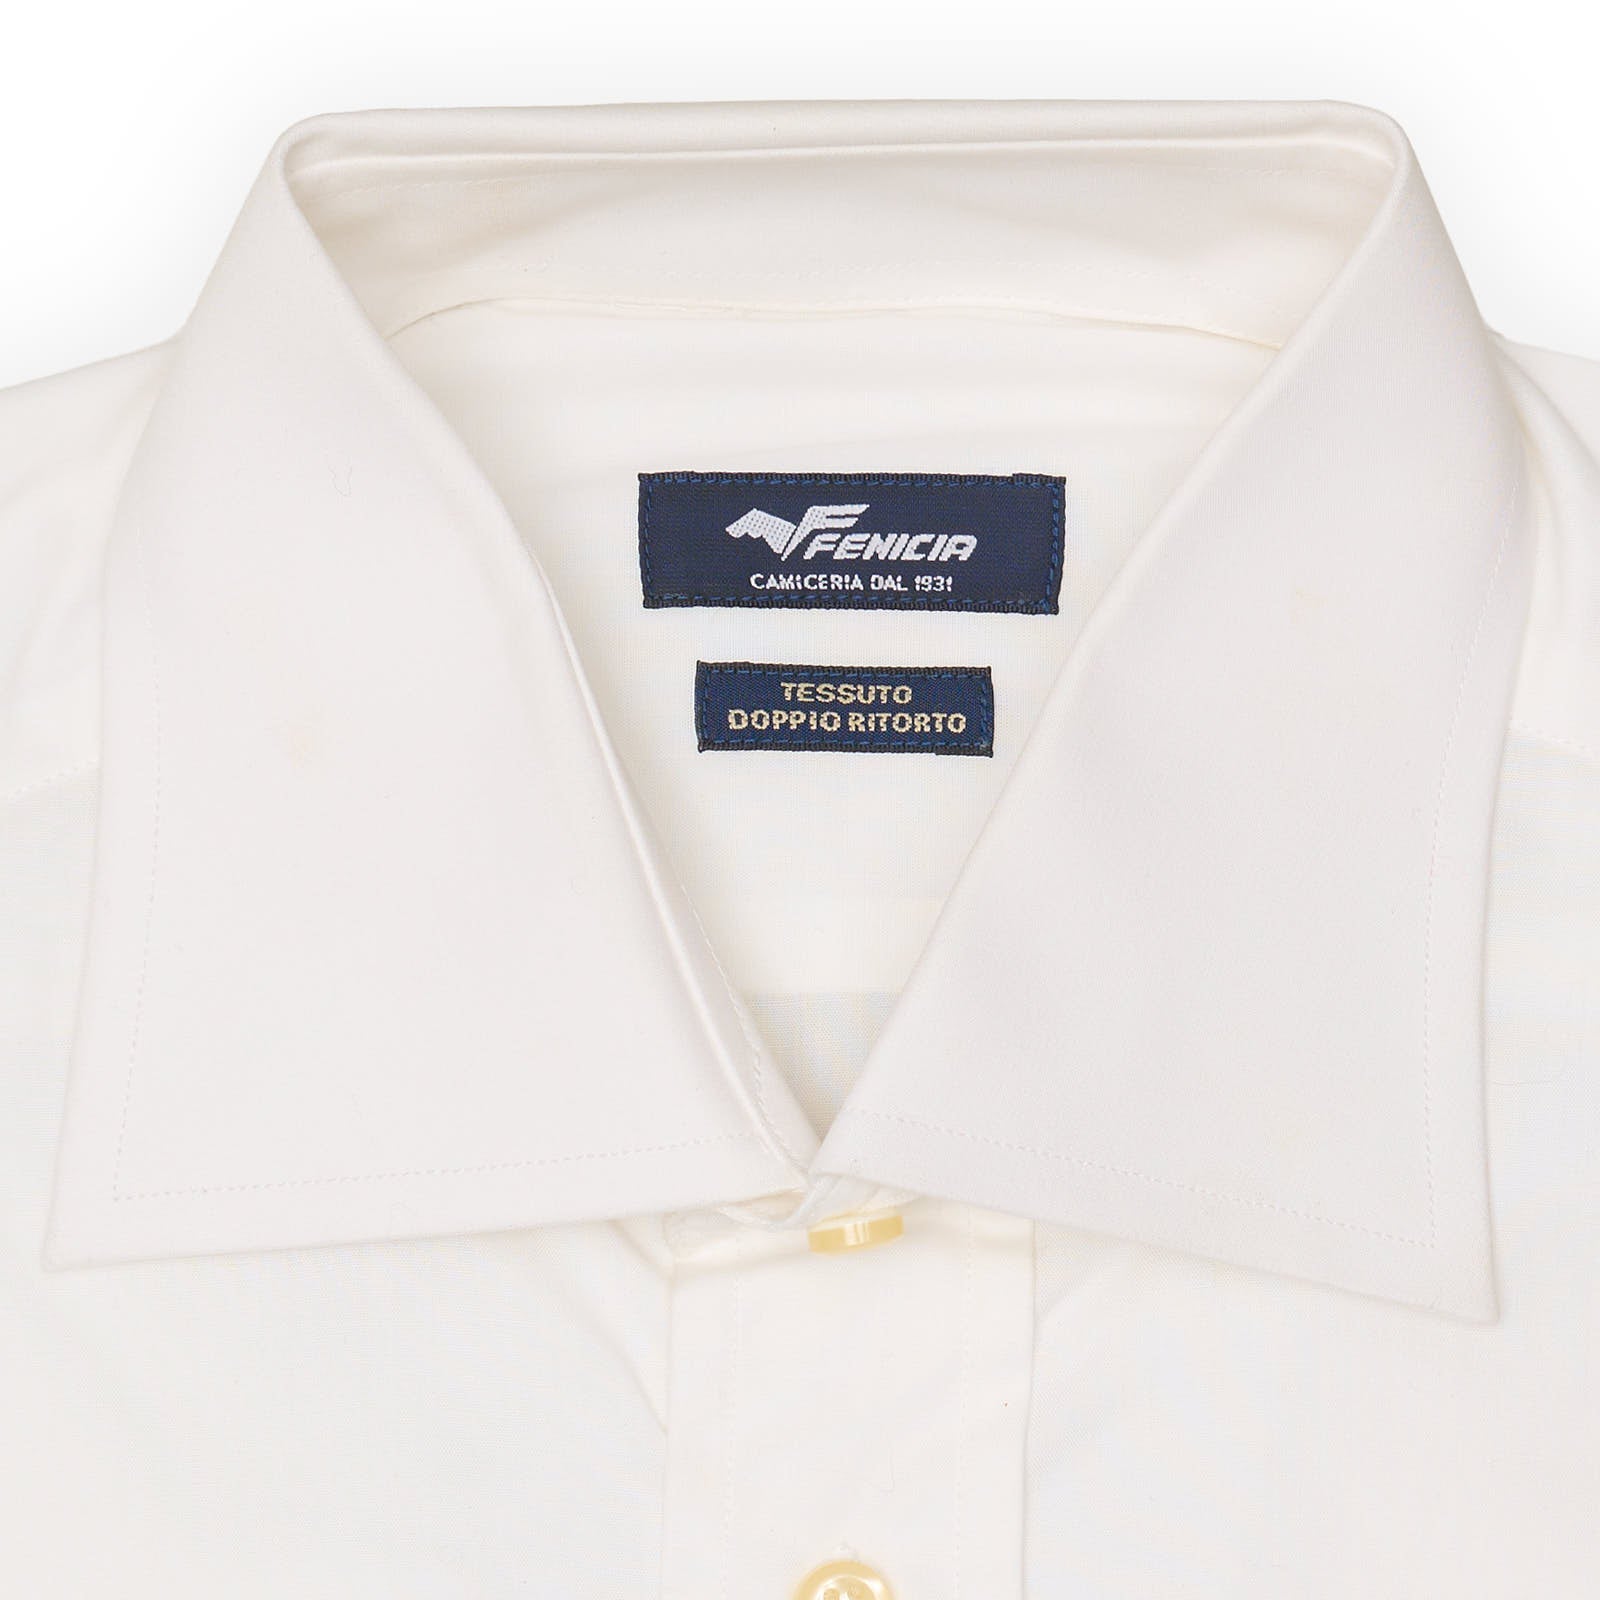 FENICIA White Poplin Cotton French Cuff Dress Shirt EU 38 NEW US 15